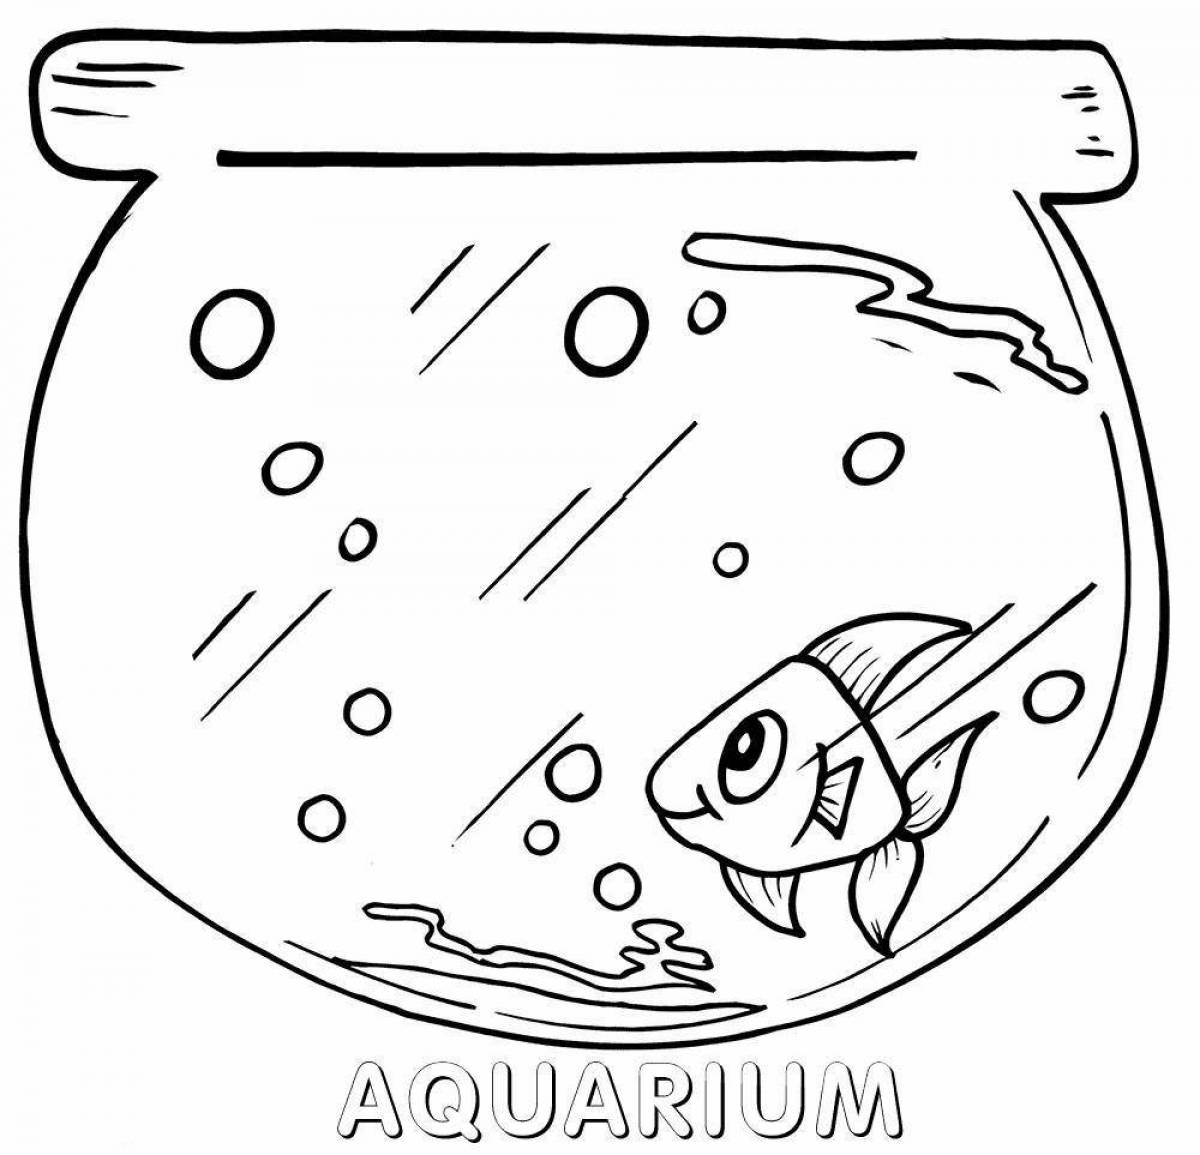 Coloring book magic aquarium with fish for kids